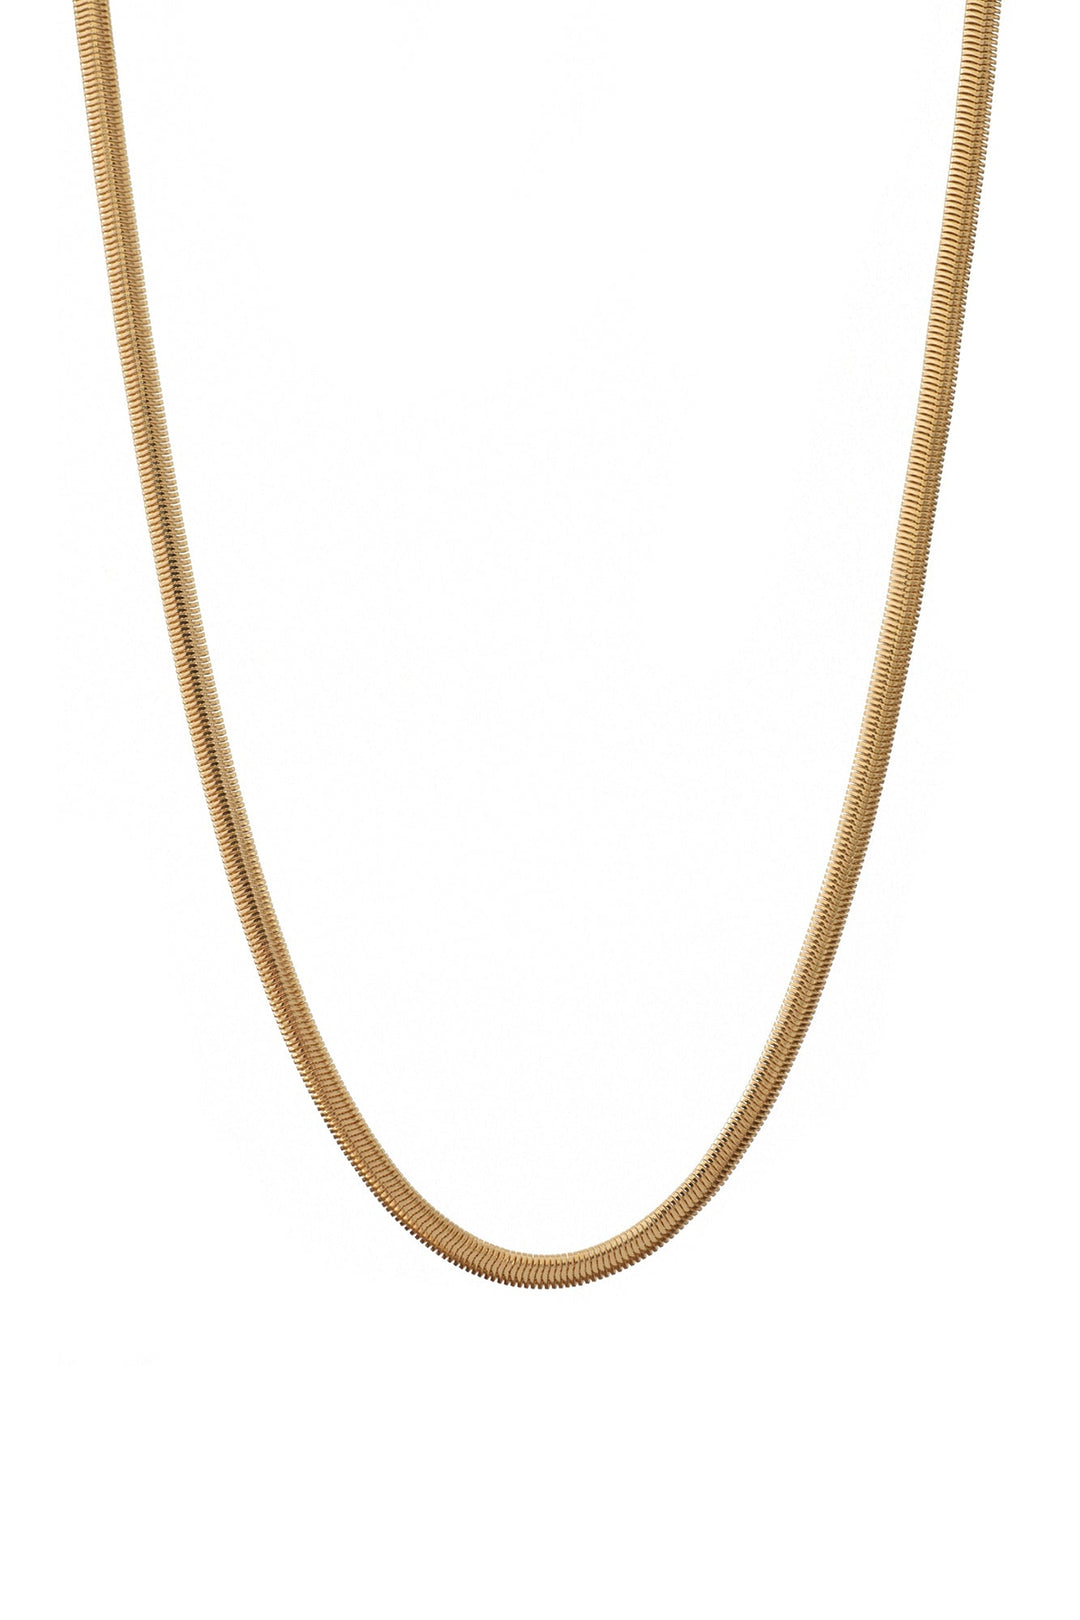 Snake Herringbone Necklace 18kt Gold Fill